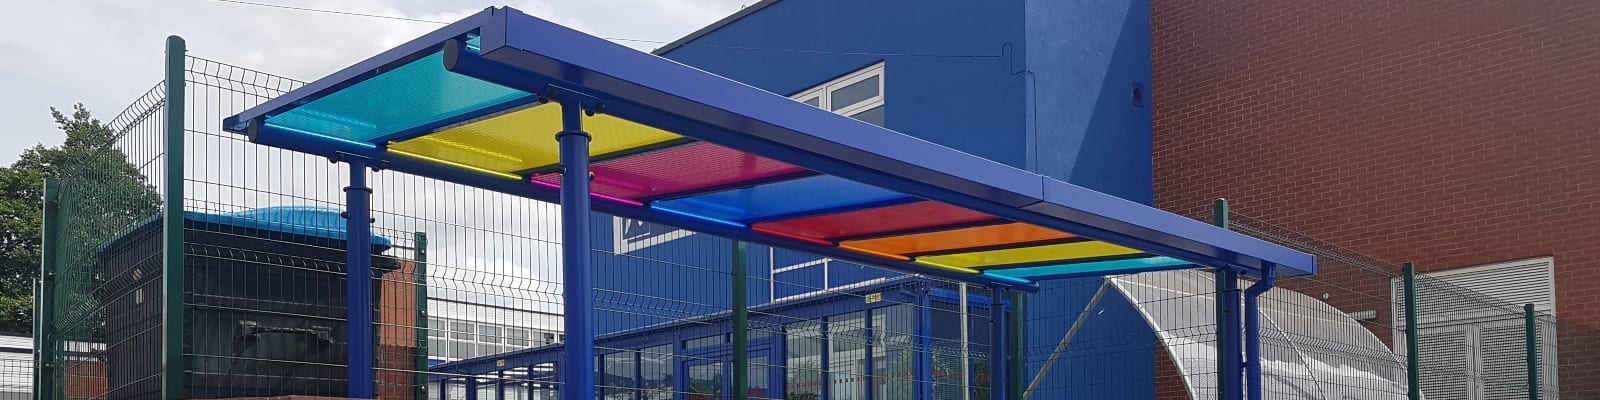 Djanogly Northgate Academy Colourful Canopy